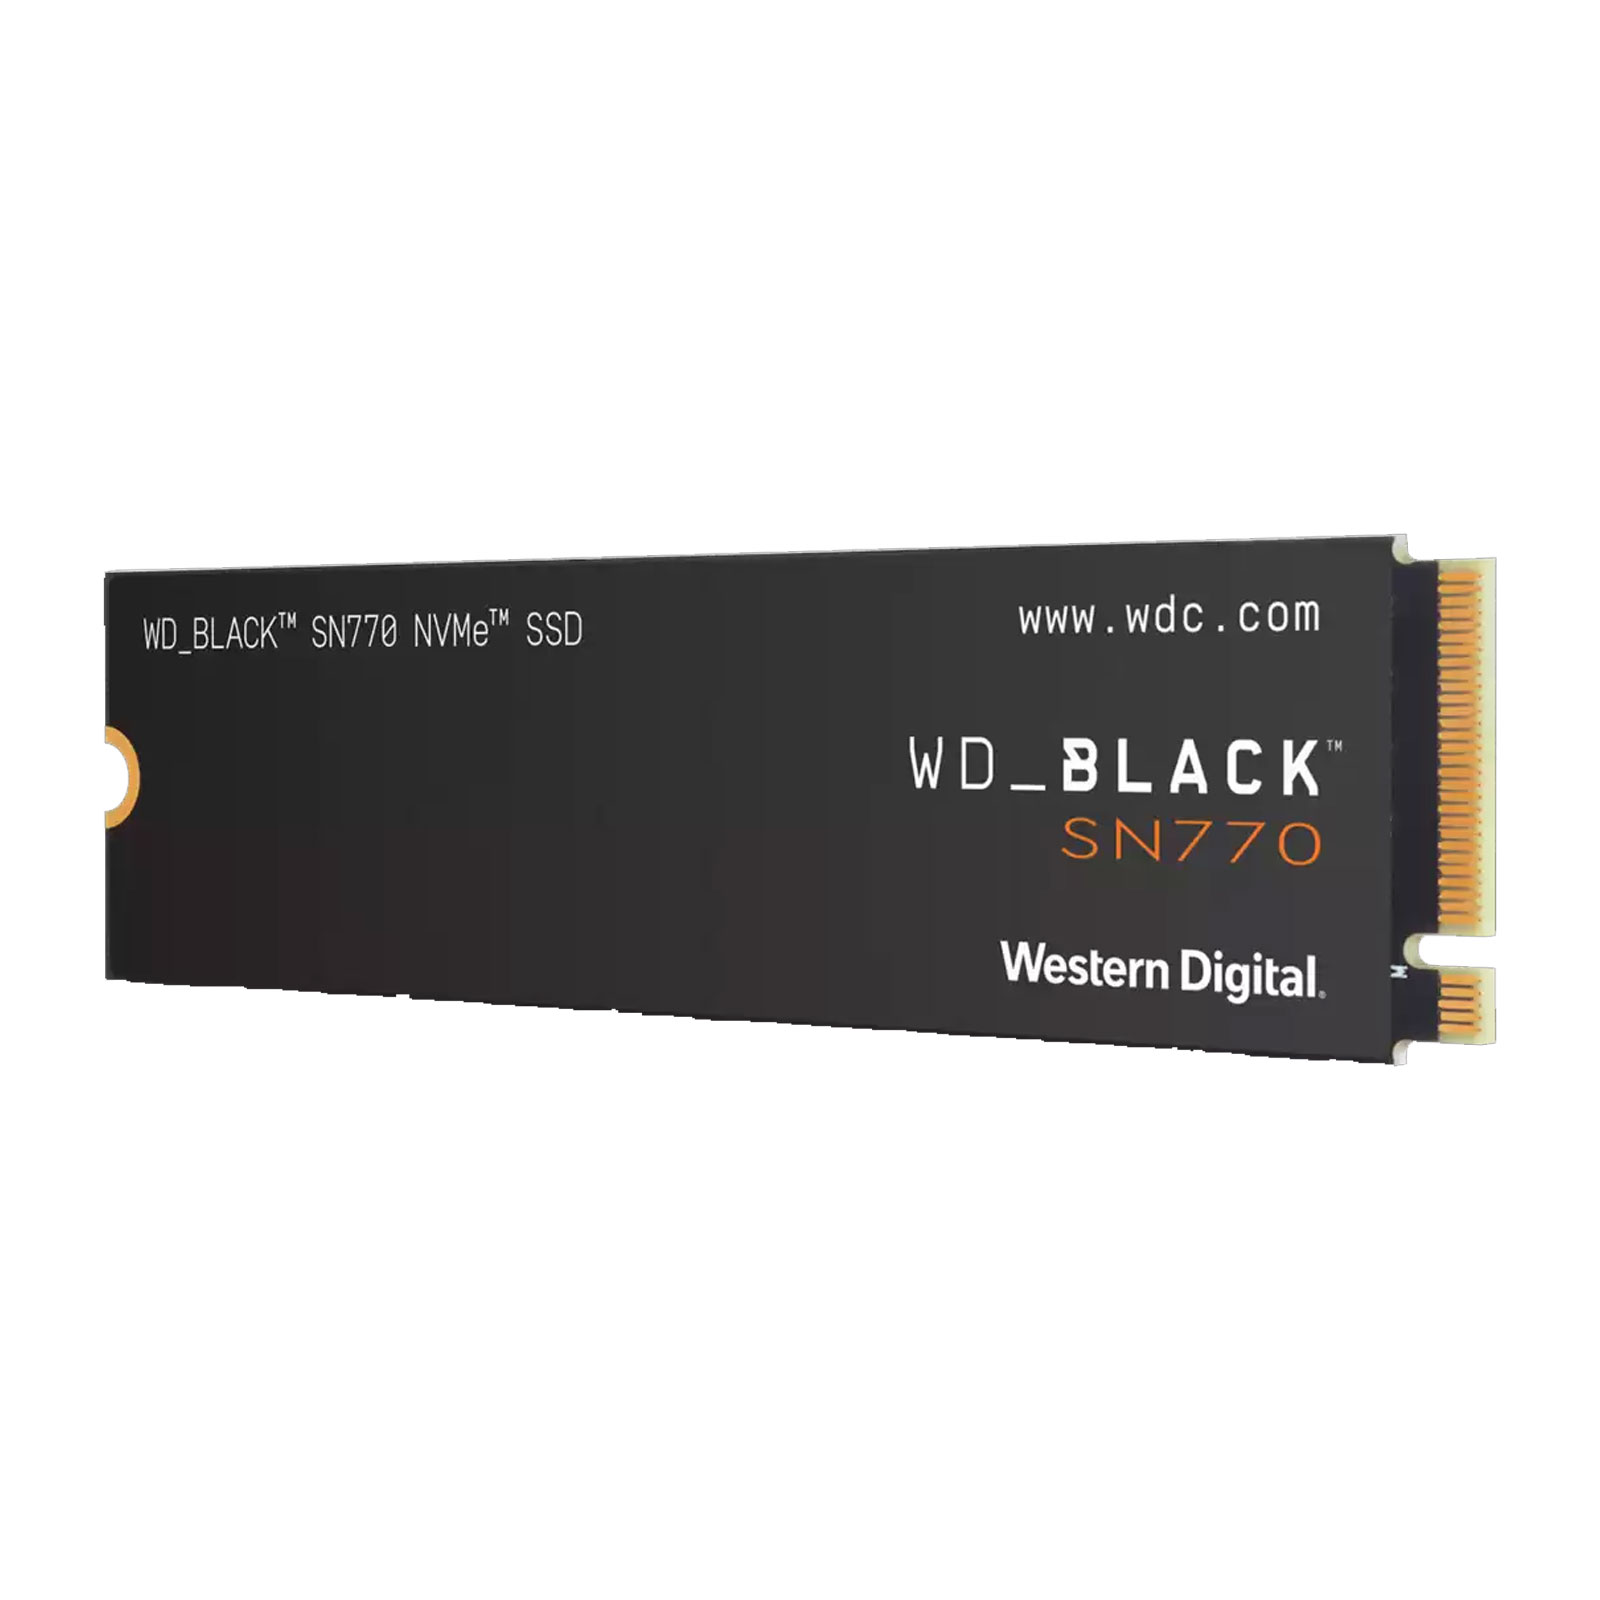 210042 SSD-Festplatte "WD_BLAC